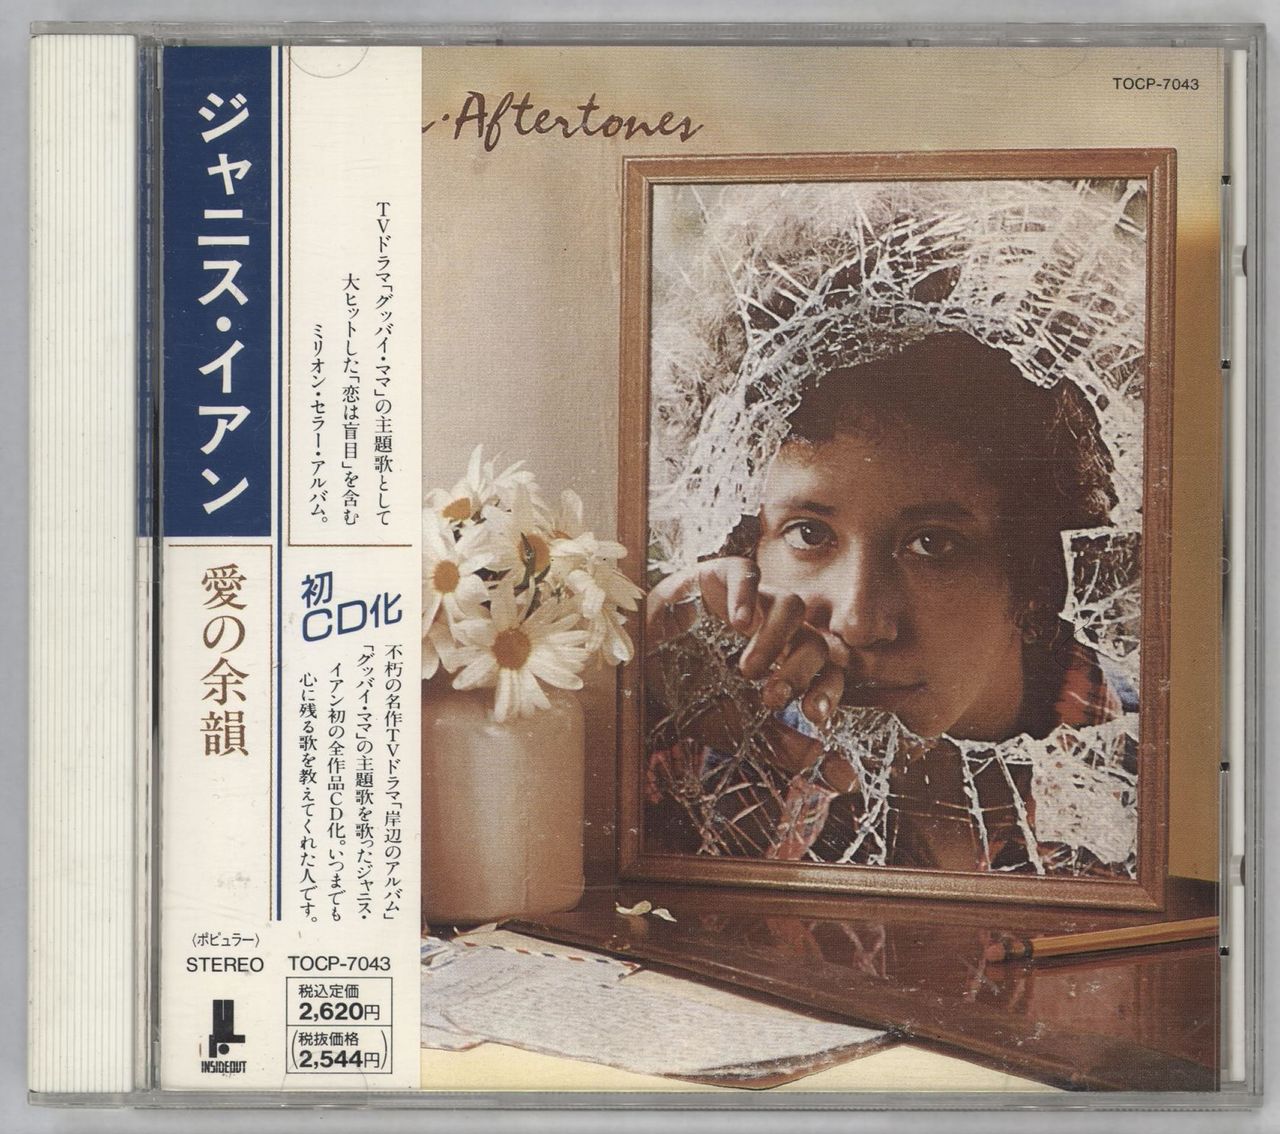 Janis Ian Aftertones Japanese Promo CD album